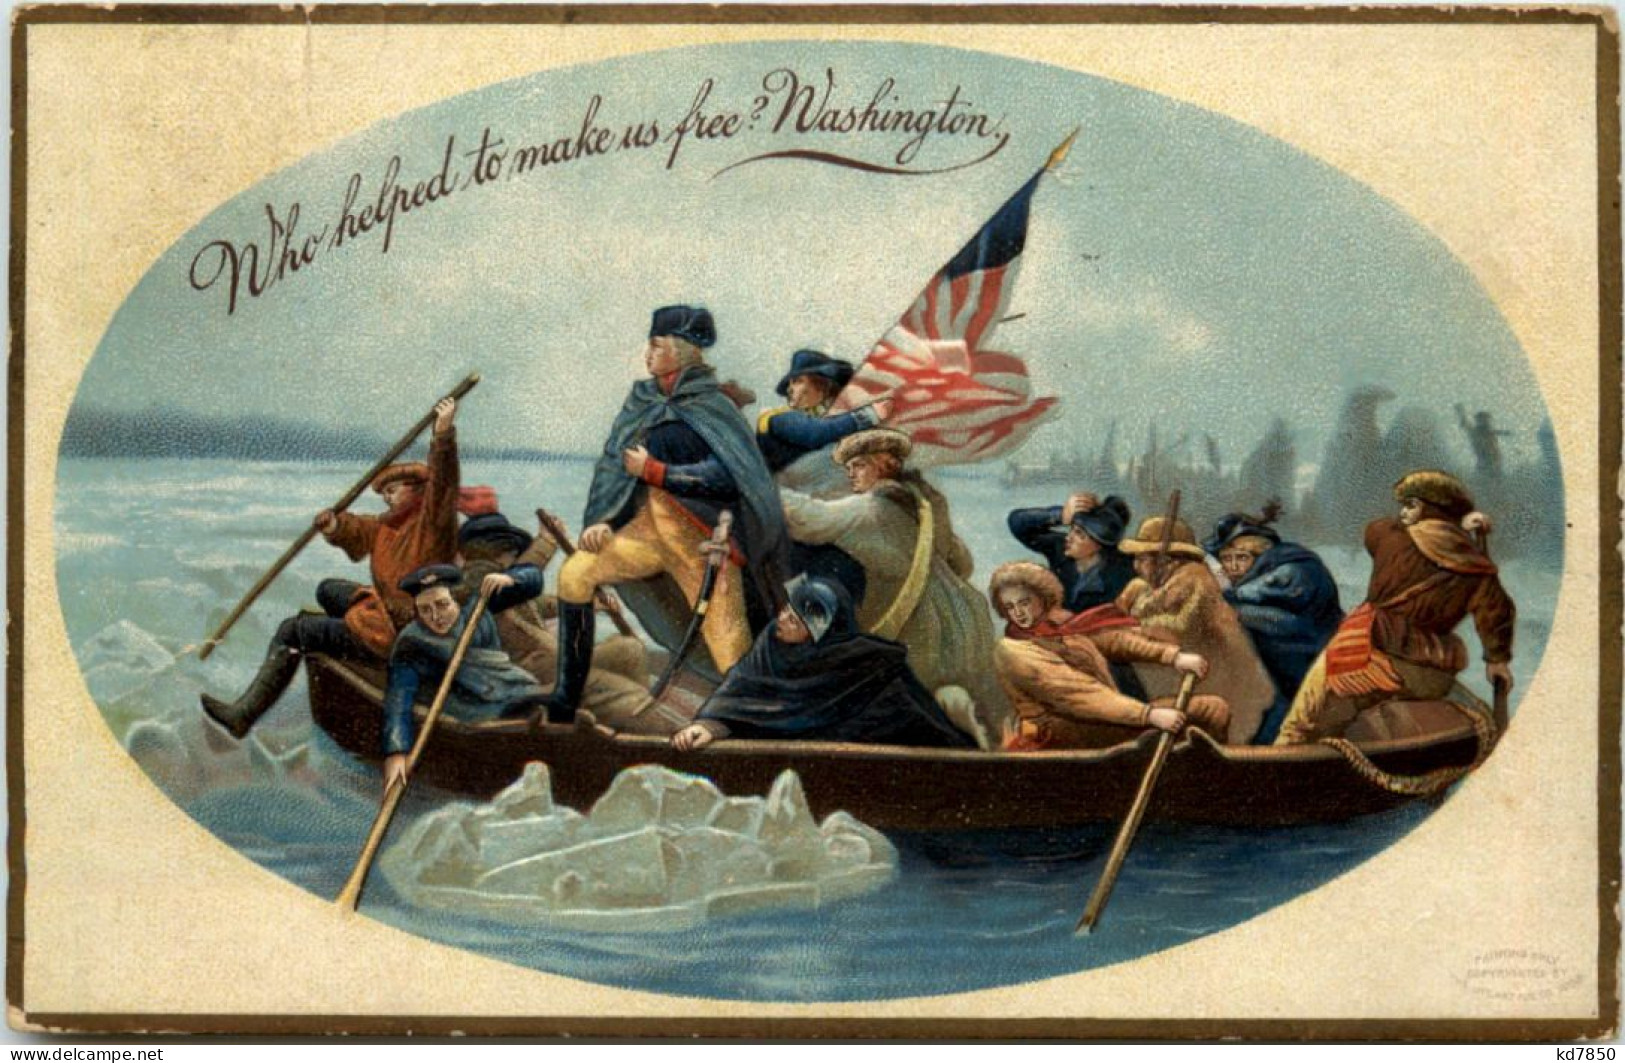 George Washington - Who Helped To Make Us Free? - Presidents